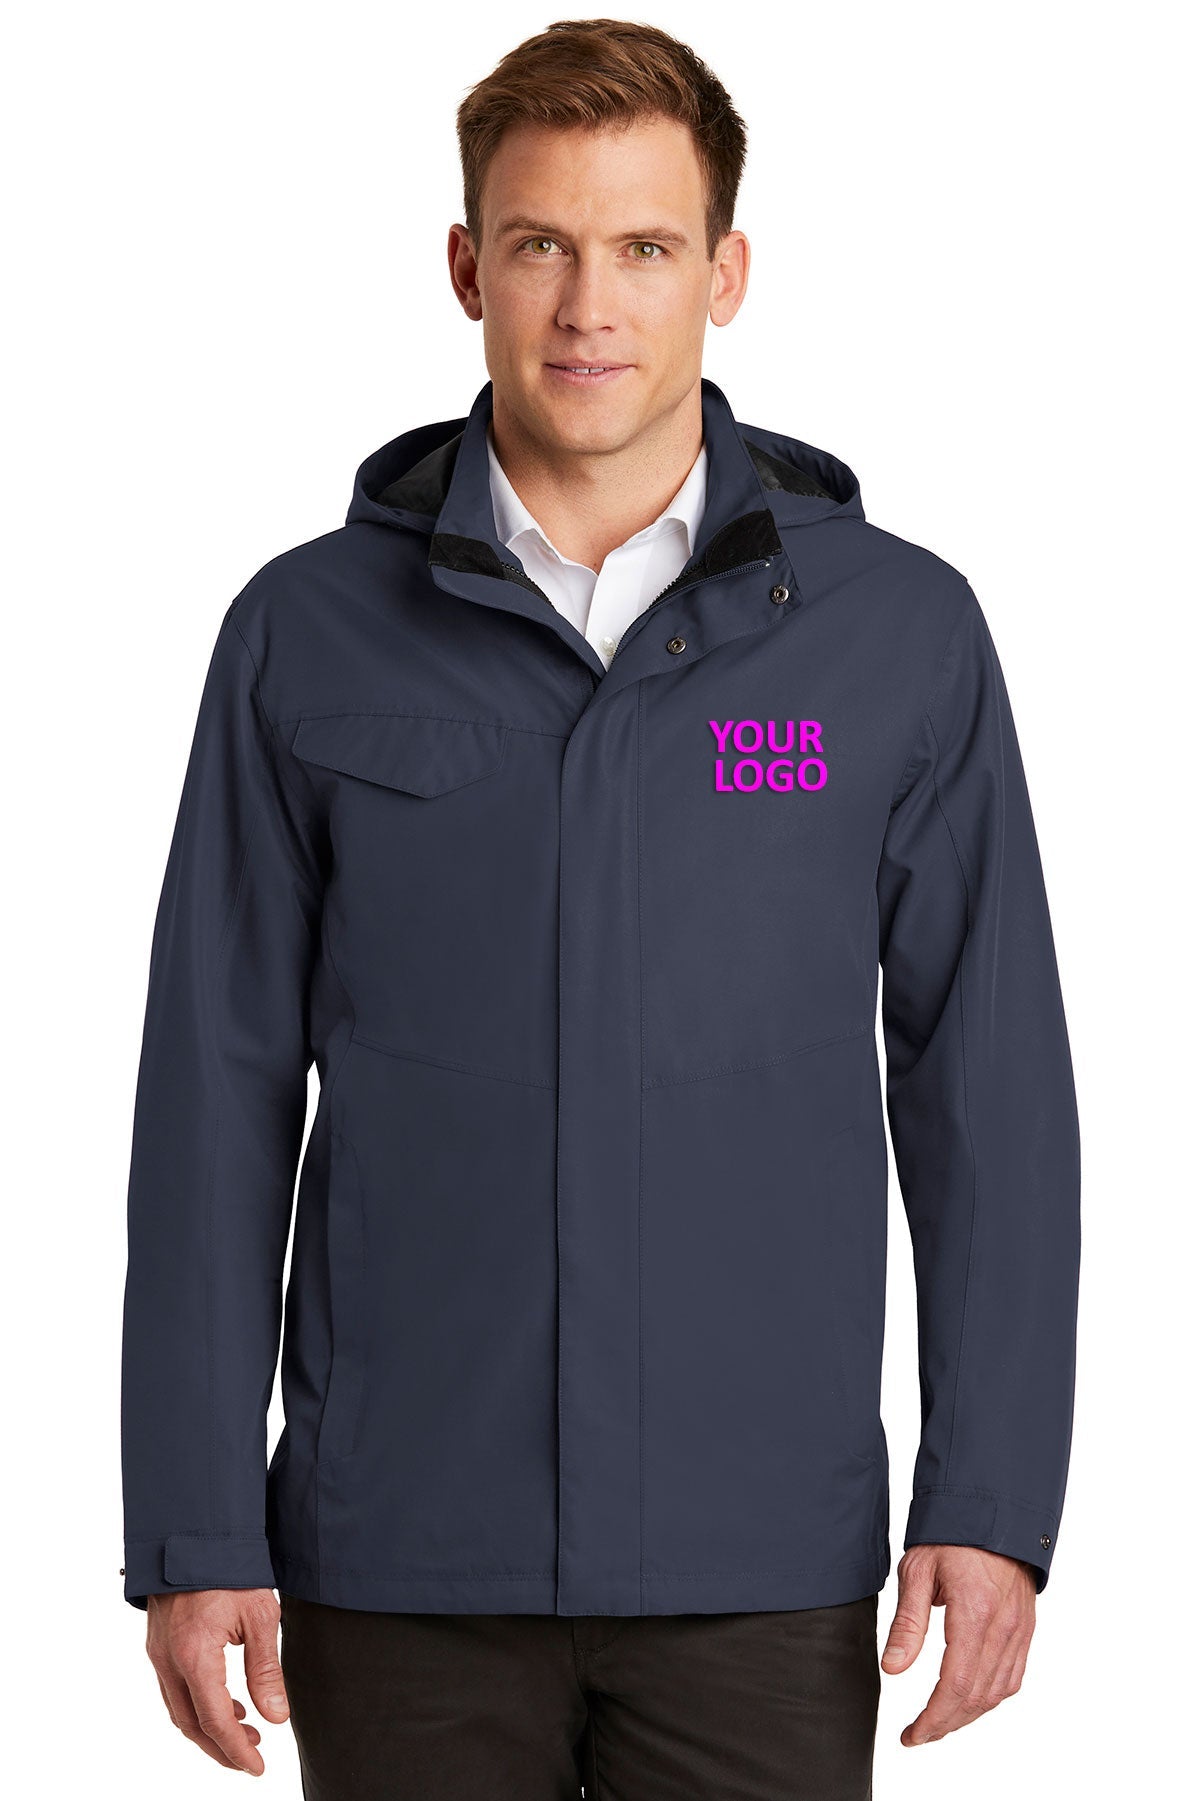 Port Authority River Blue Navy J900 company jackets with logo